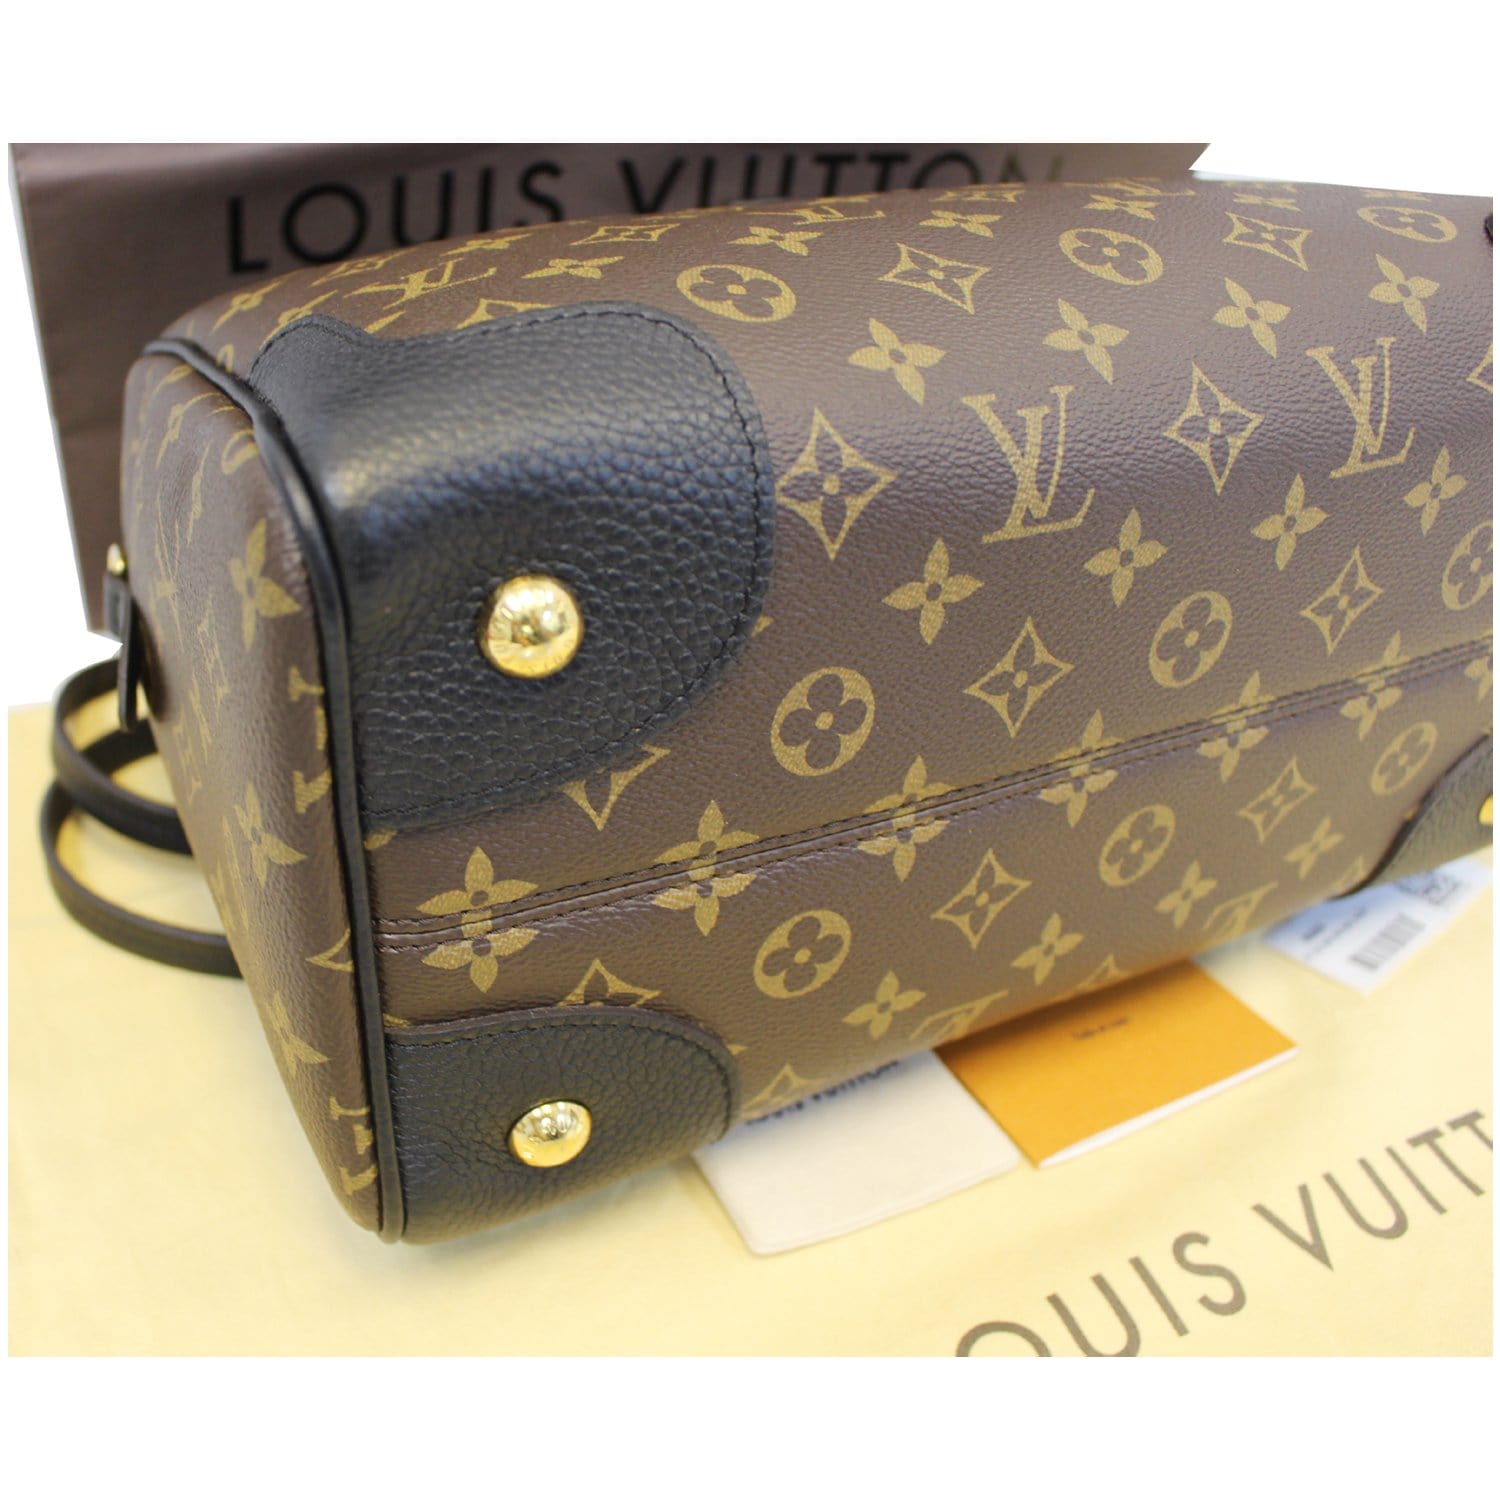 Shop authentic Louis Vuitton Monogram Retiro NM at revogue for